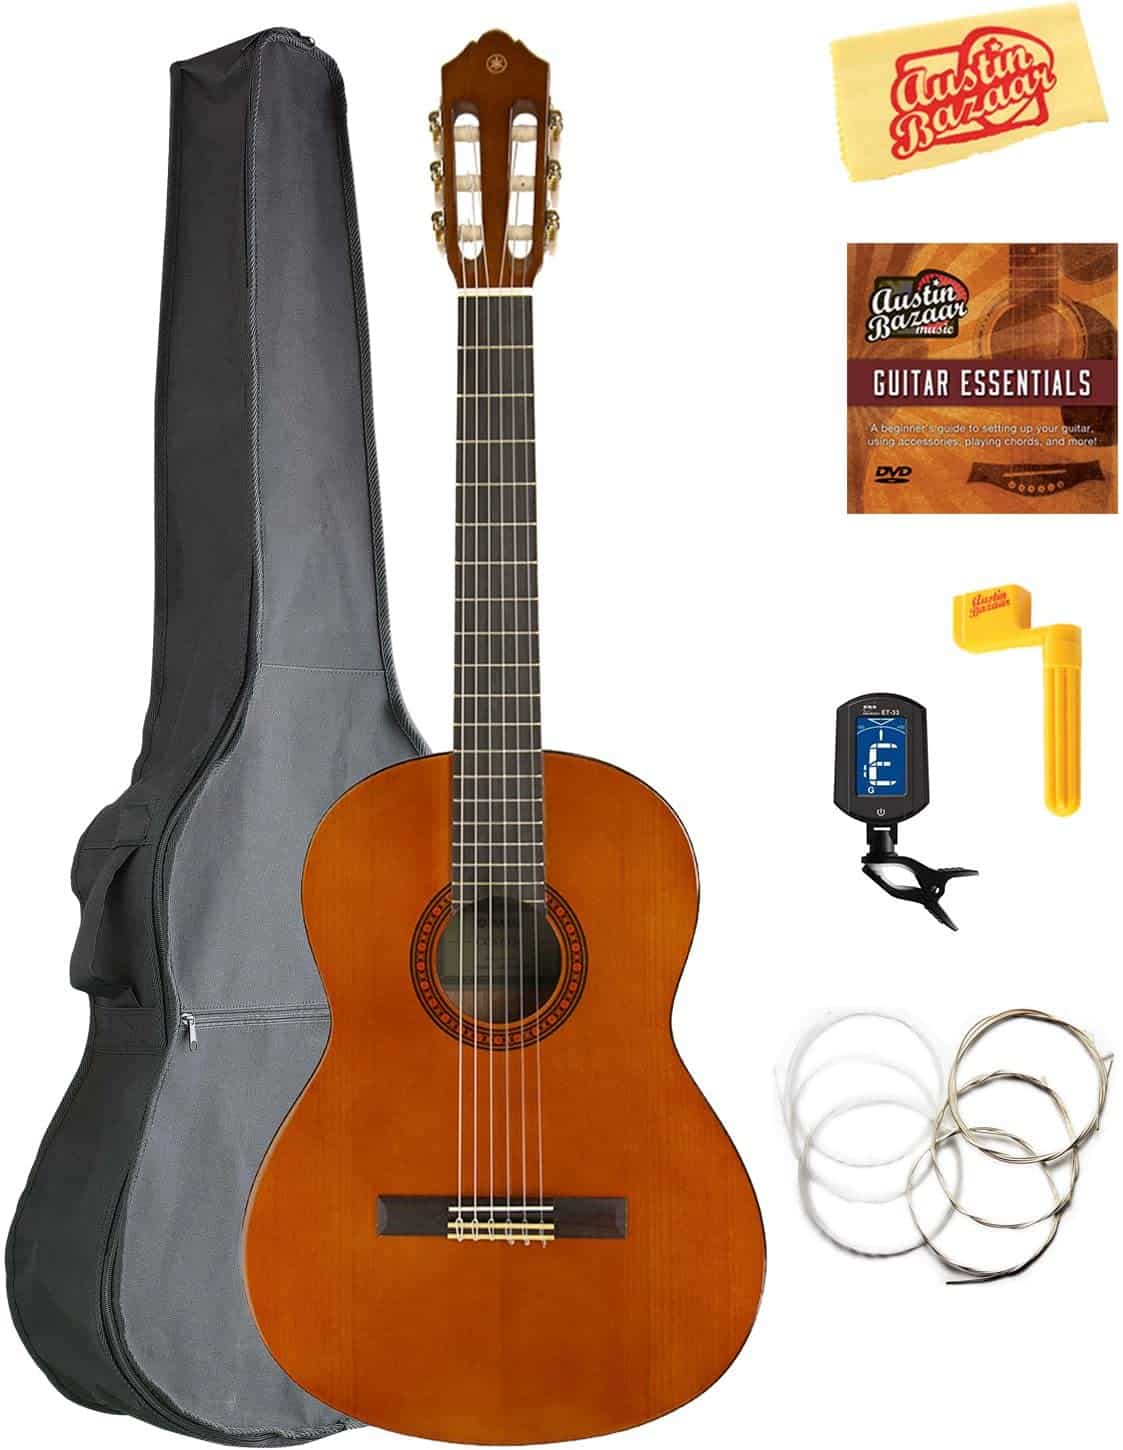 Yamaha CGS103A 3:4-Size Classical Guitar Bundle with Gig Bag, Tuner, Strings, String Winder, Austin Bazaar Instructional DVD, and Polishing Cloth